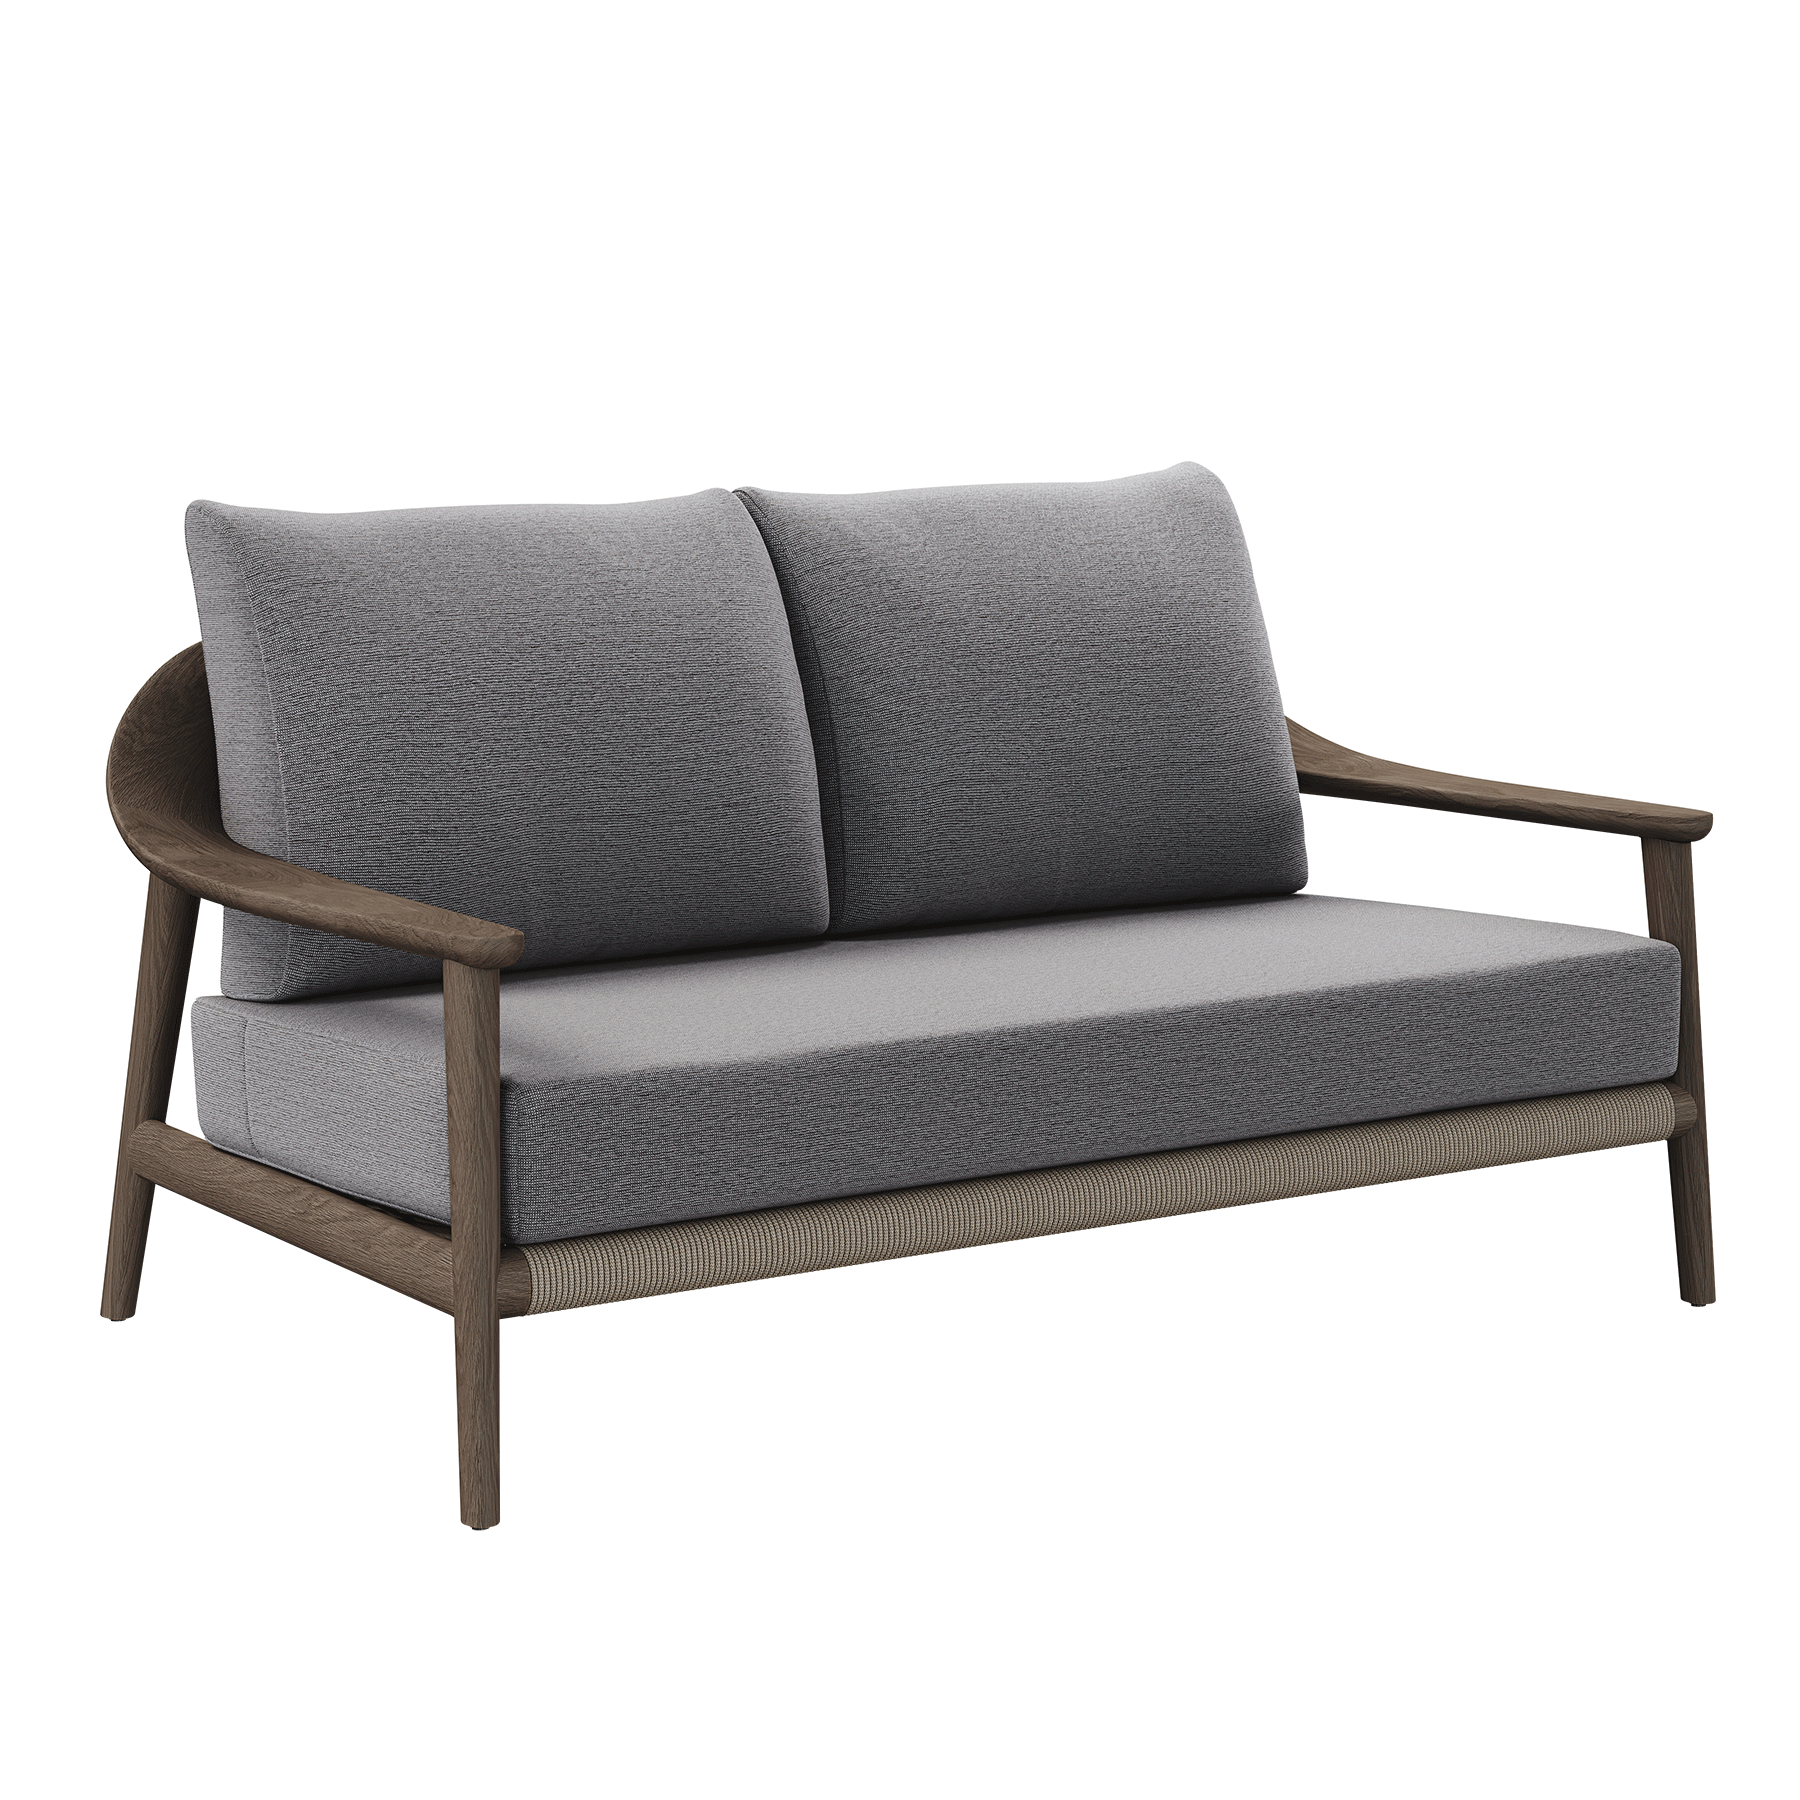 N1 luxury dark teak outdoor furniture with mid century inspired rope detail garden two seater sofa